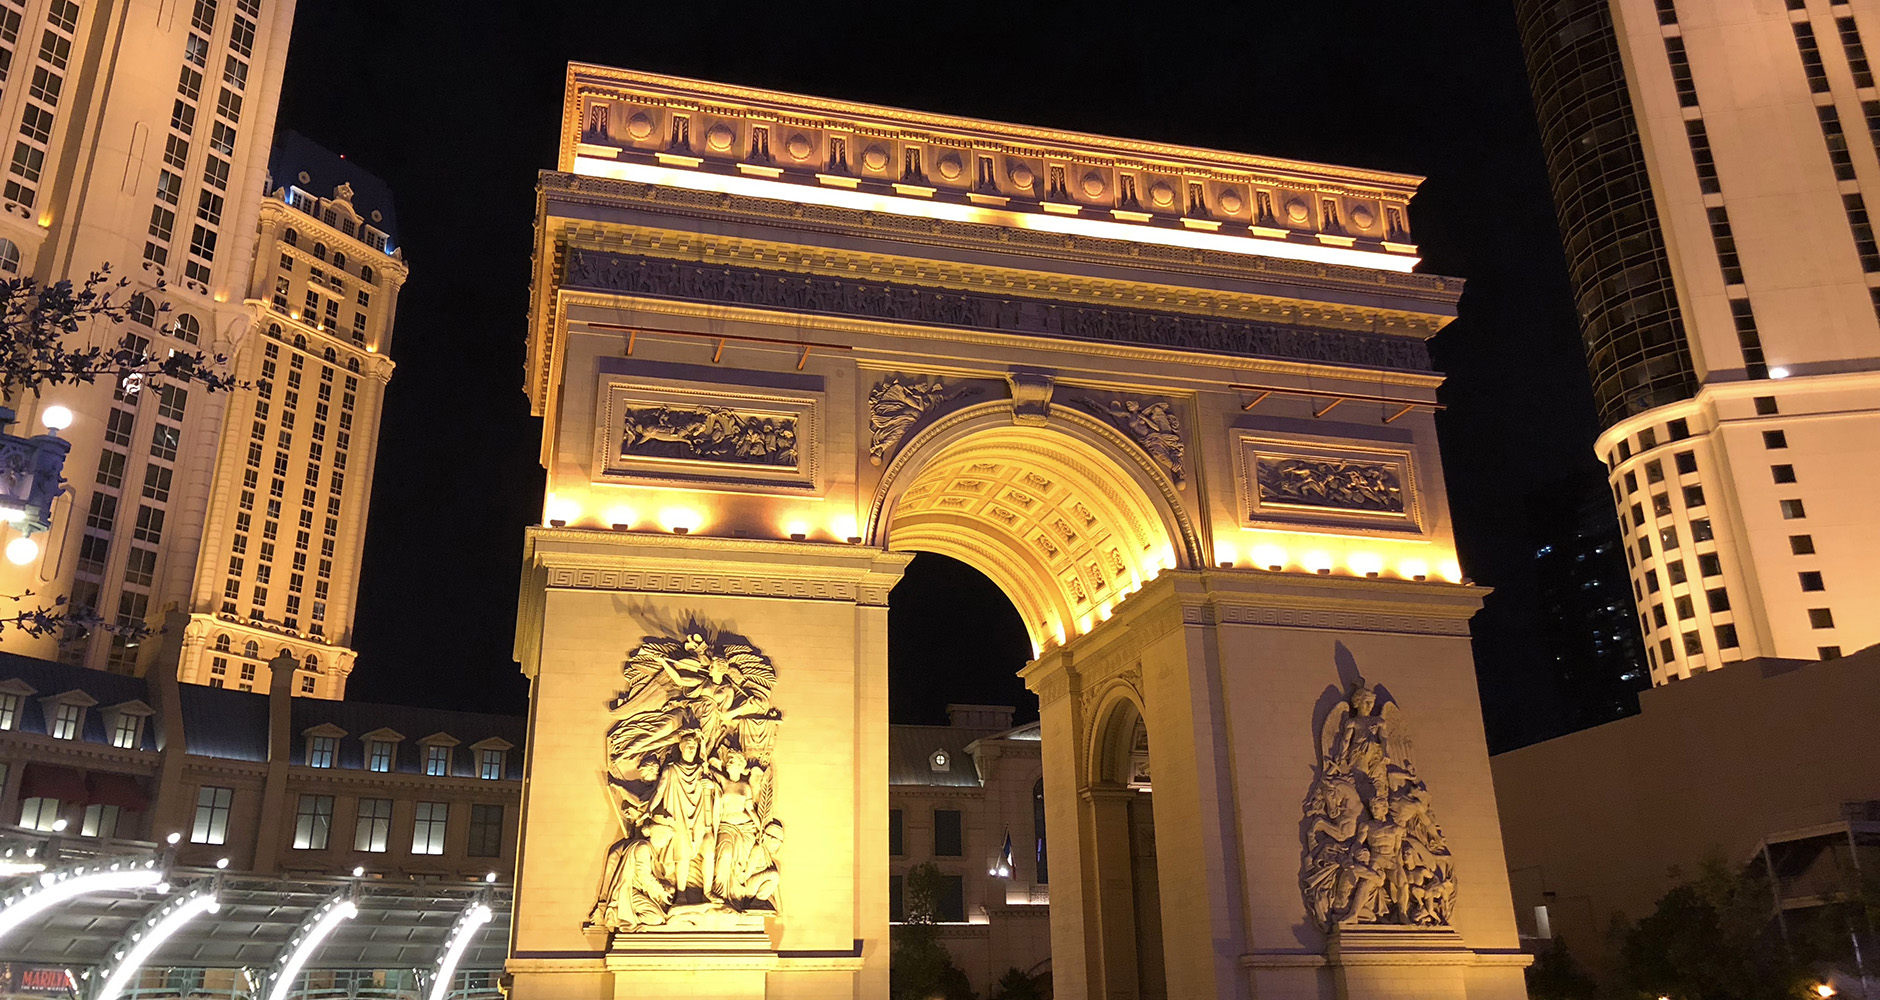 Highly convincing Arc De Triomphe replica at Paris Las Vegas